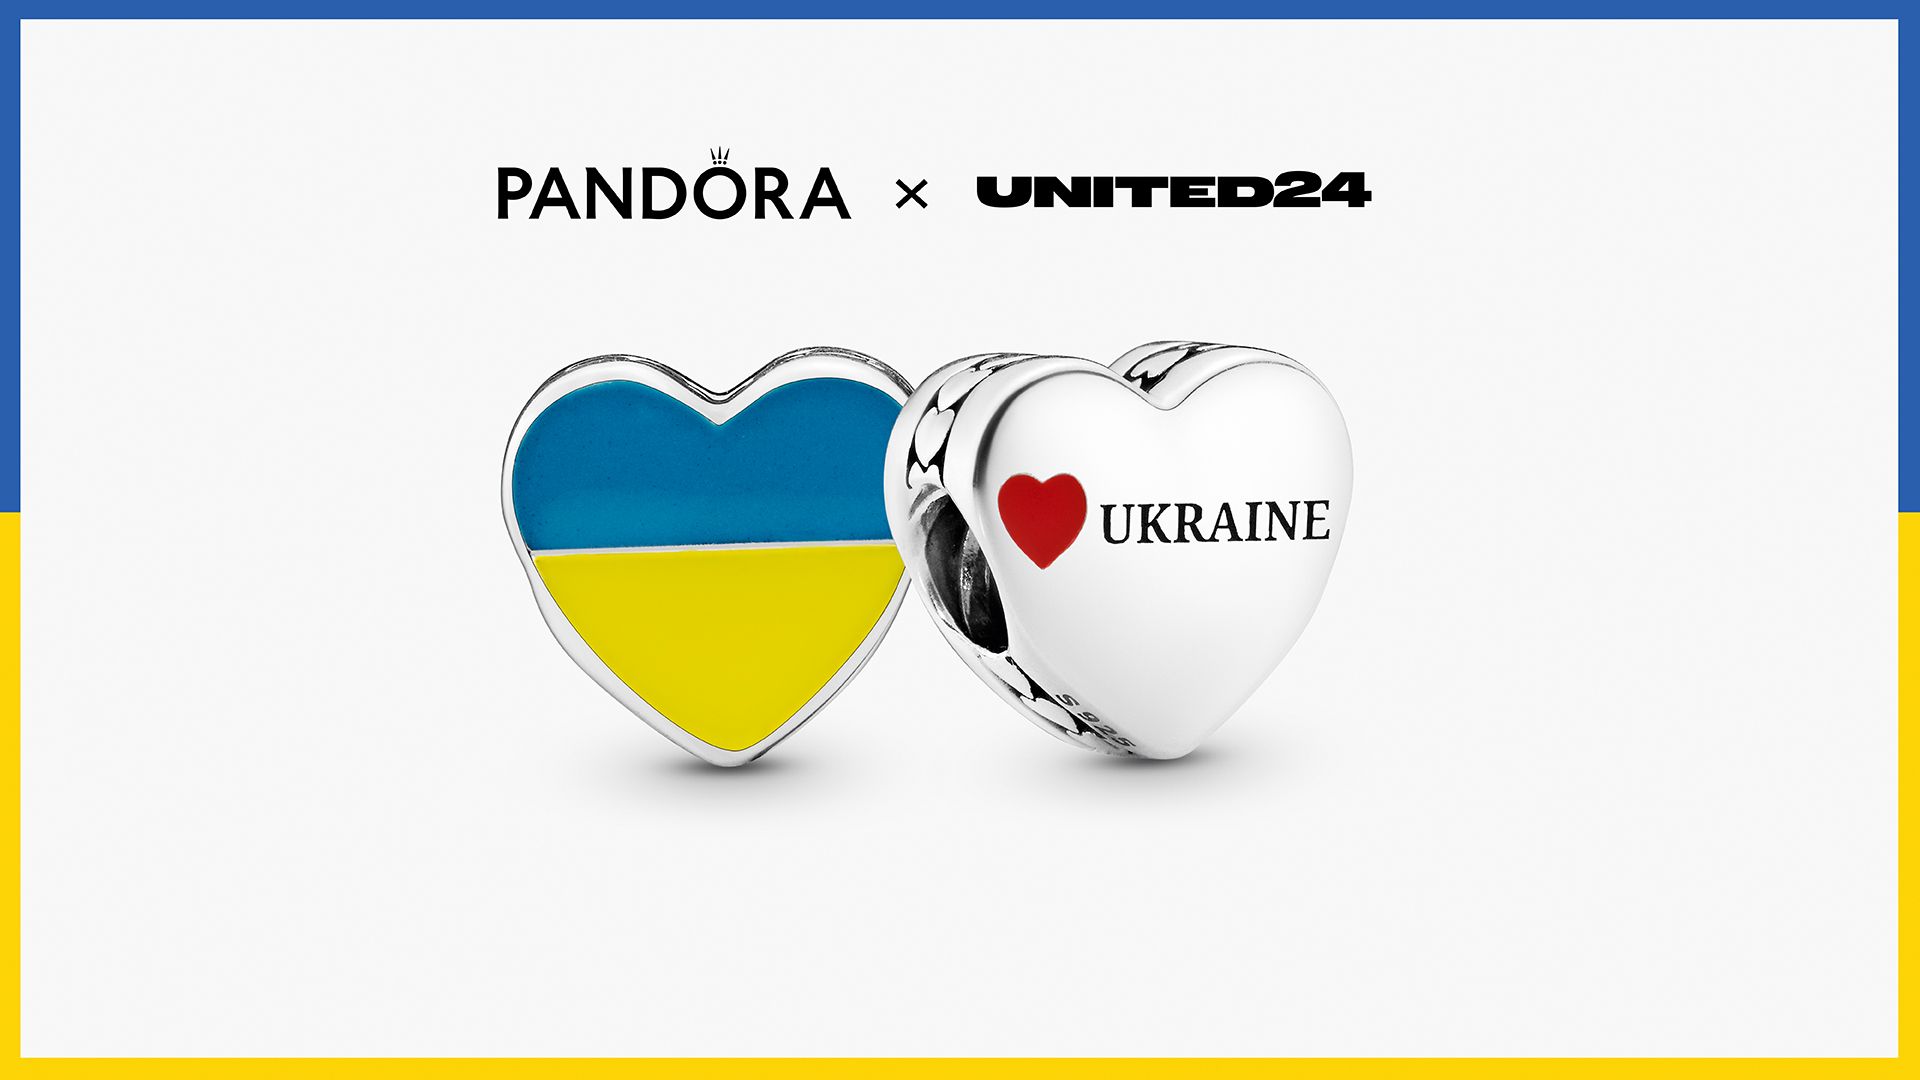 UKR_SITE_UNITED-BONITATEM